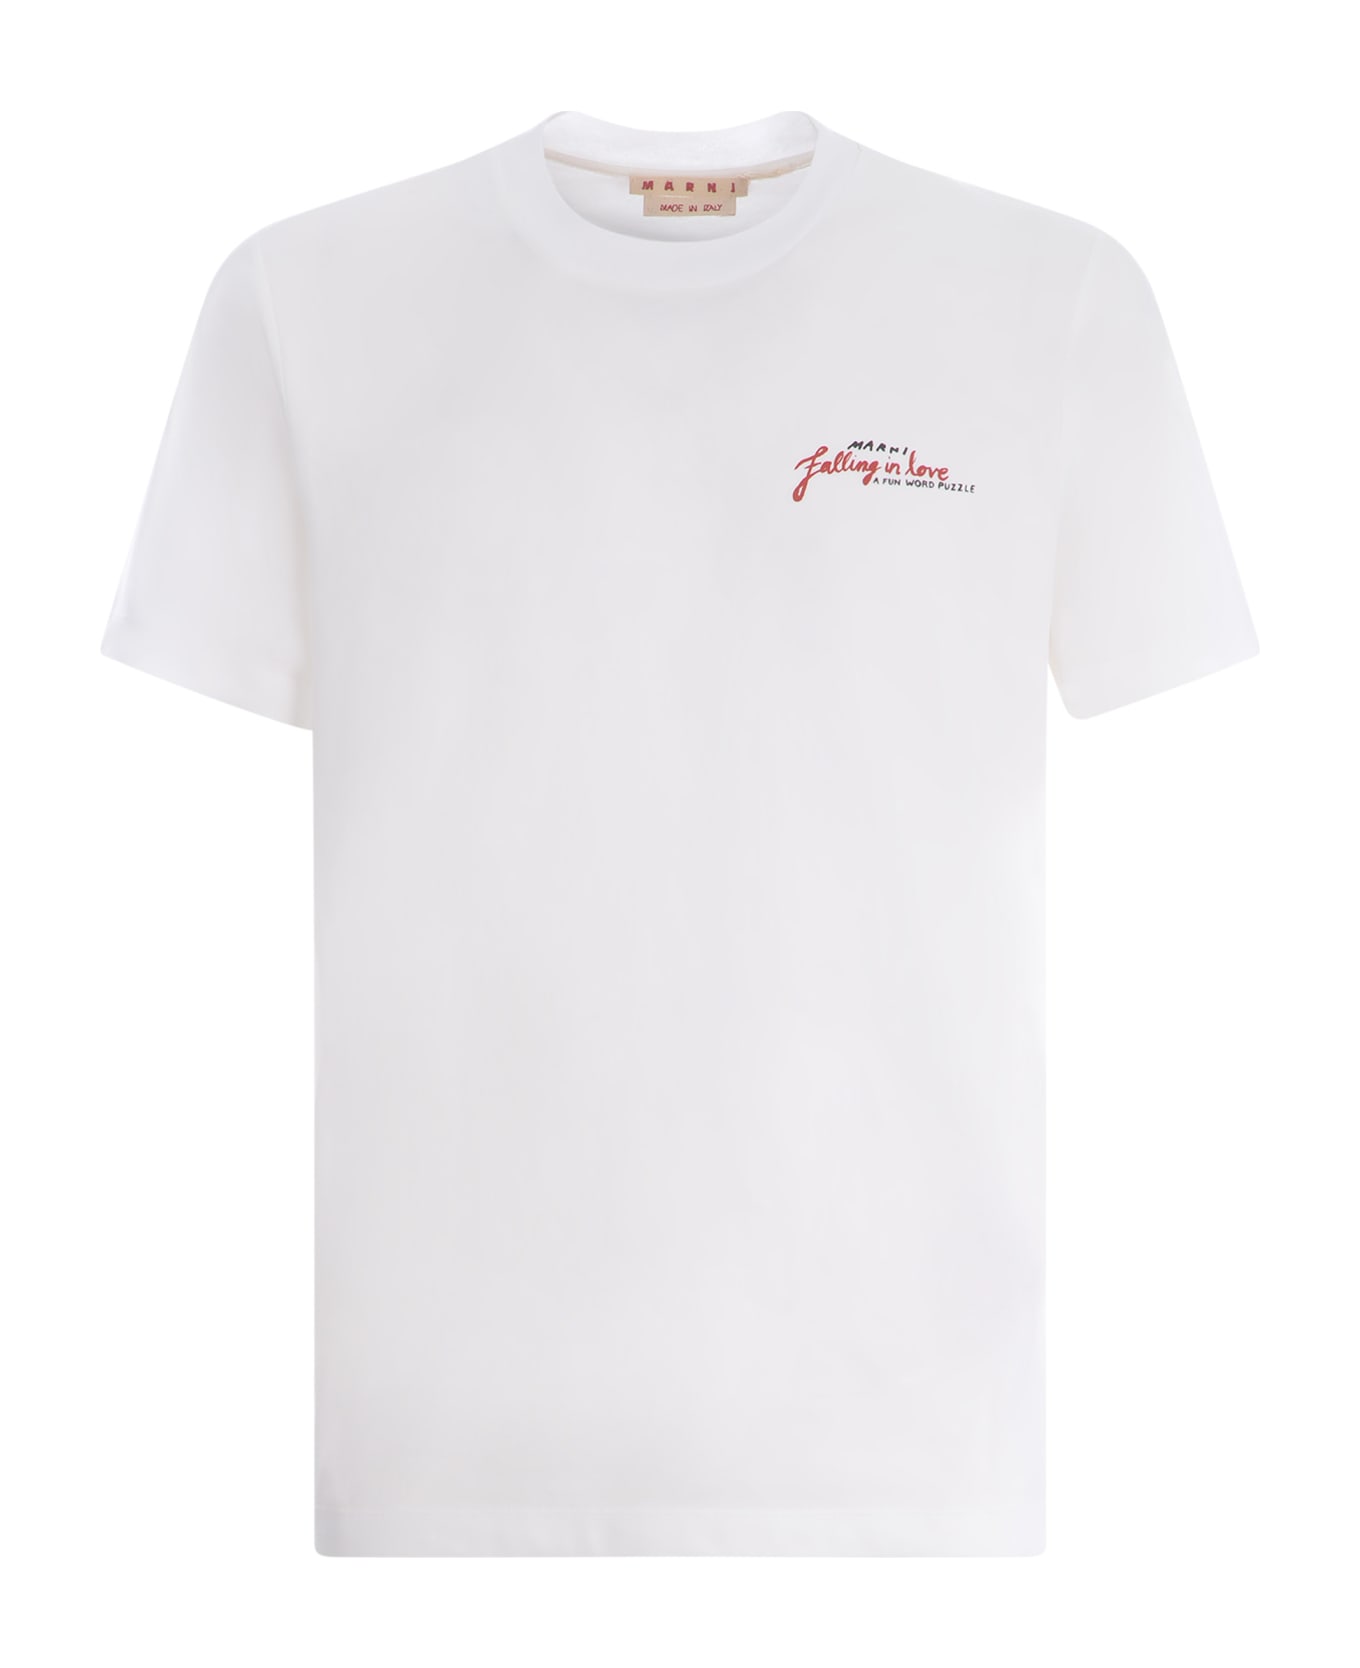 Marni Wordsearch Heart Print T-shirt - Bianco